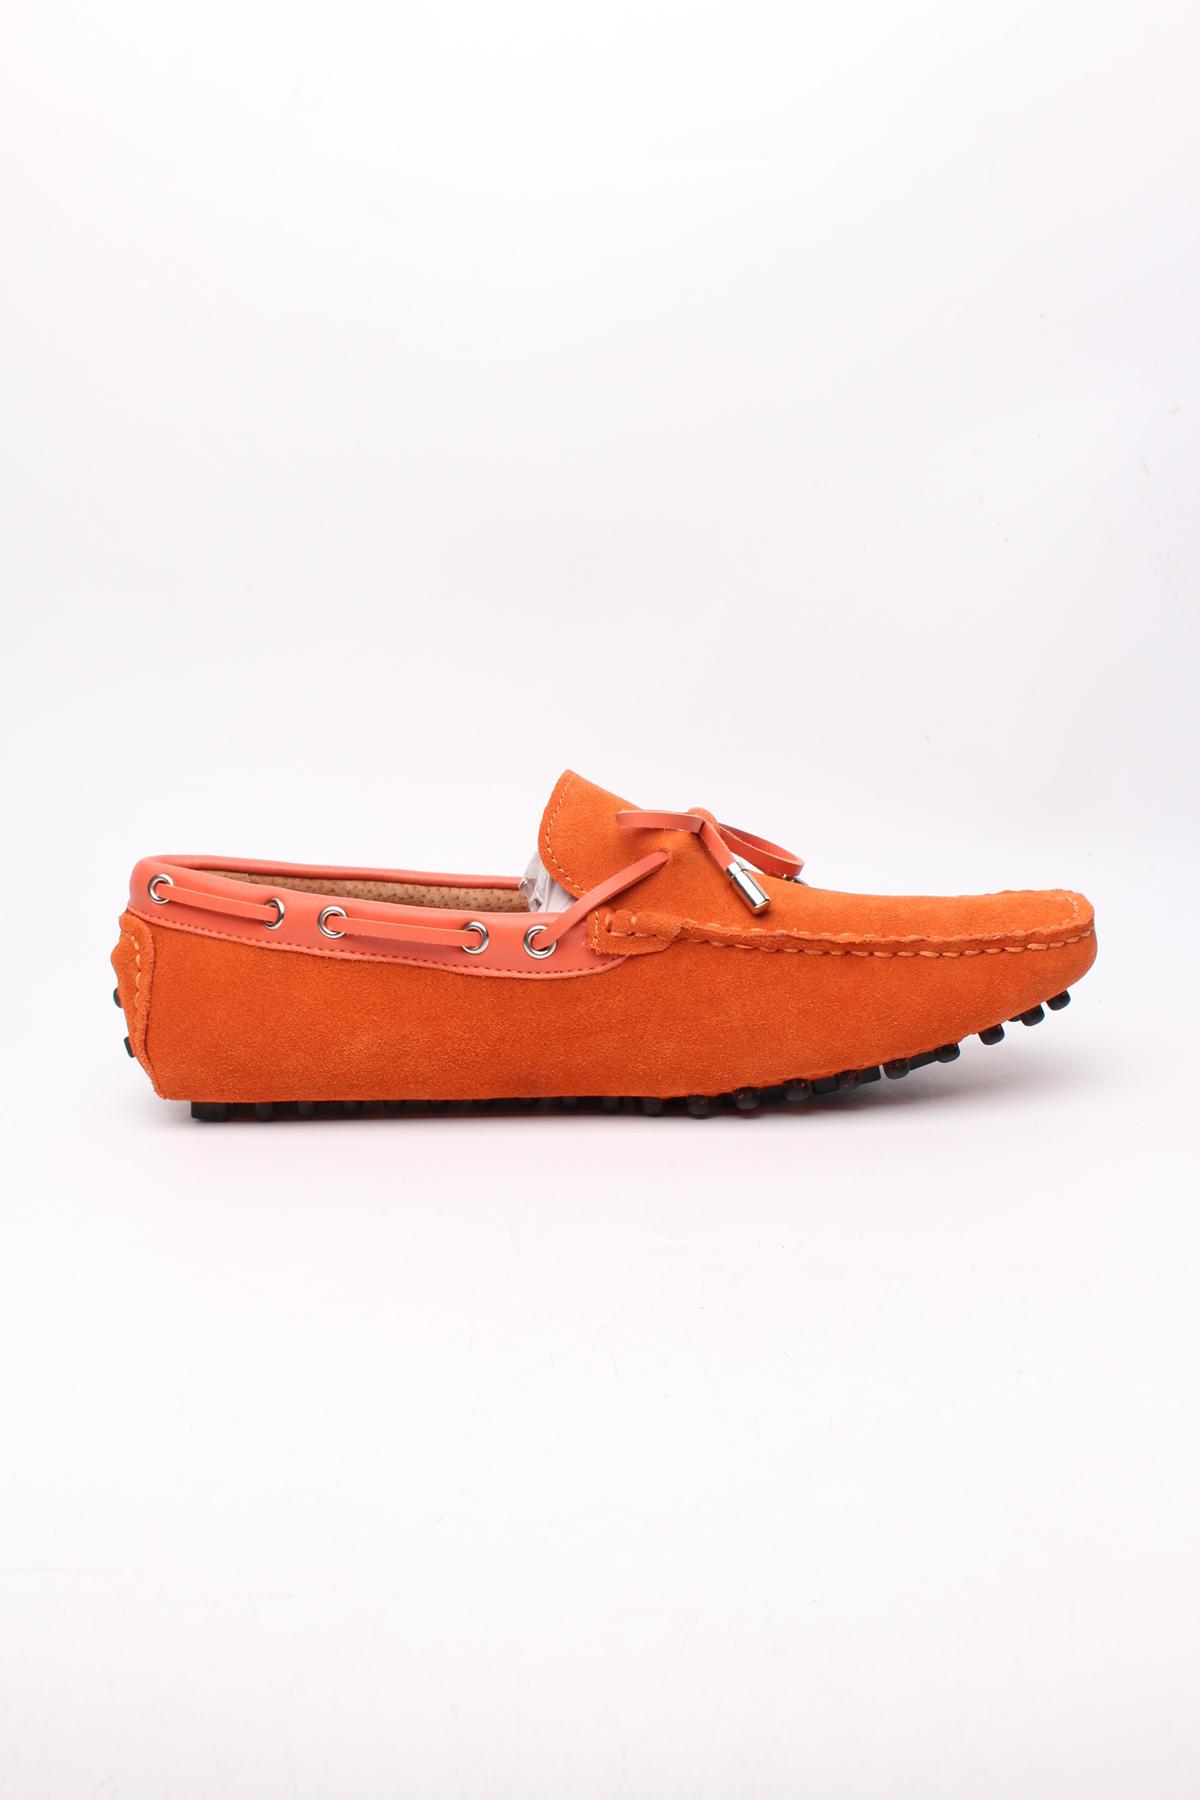 Moccasin Shoes Orange UOMO design RL1007 #c Efashion Paris